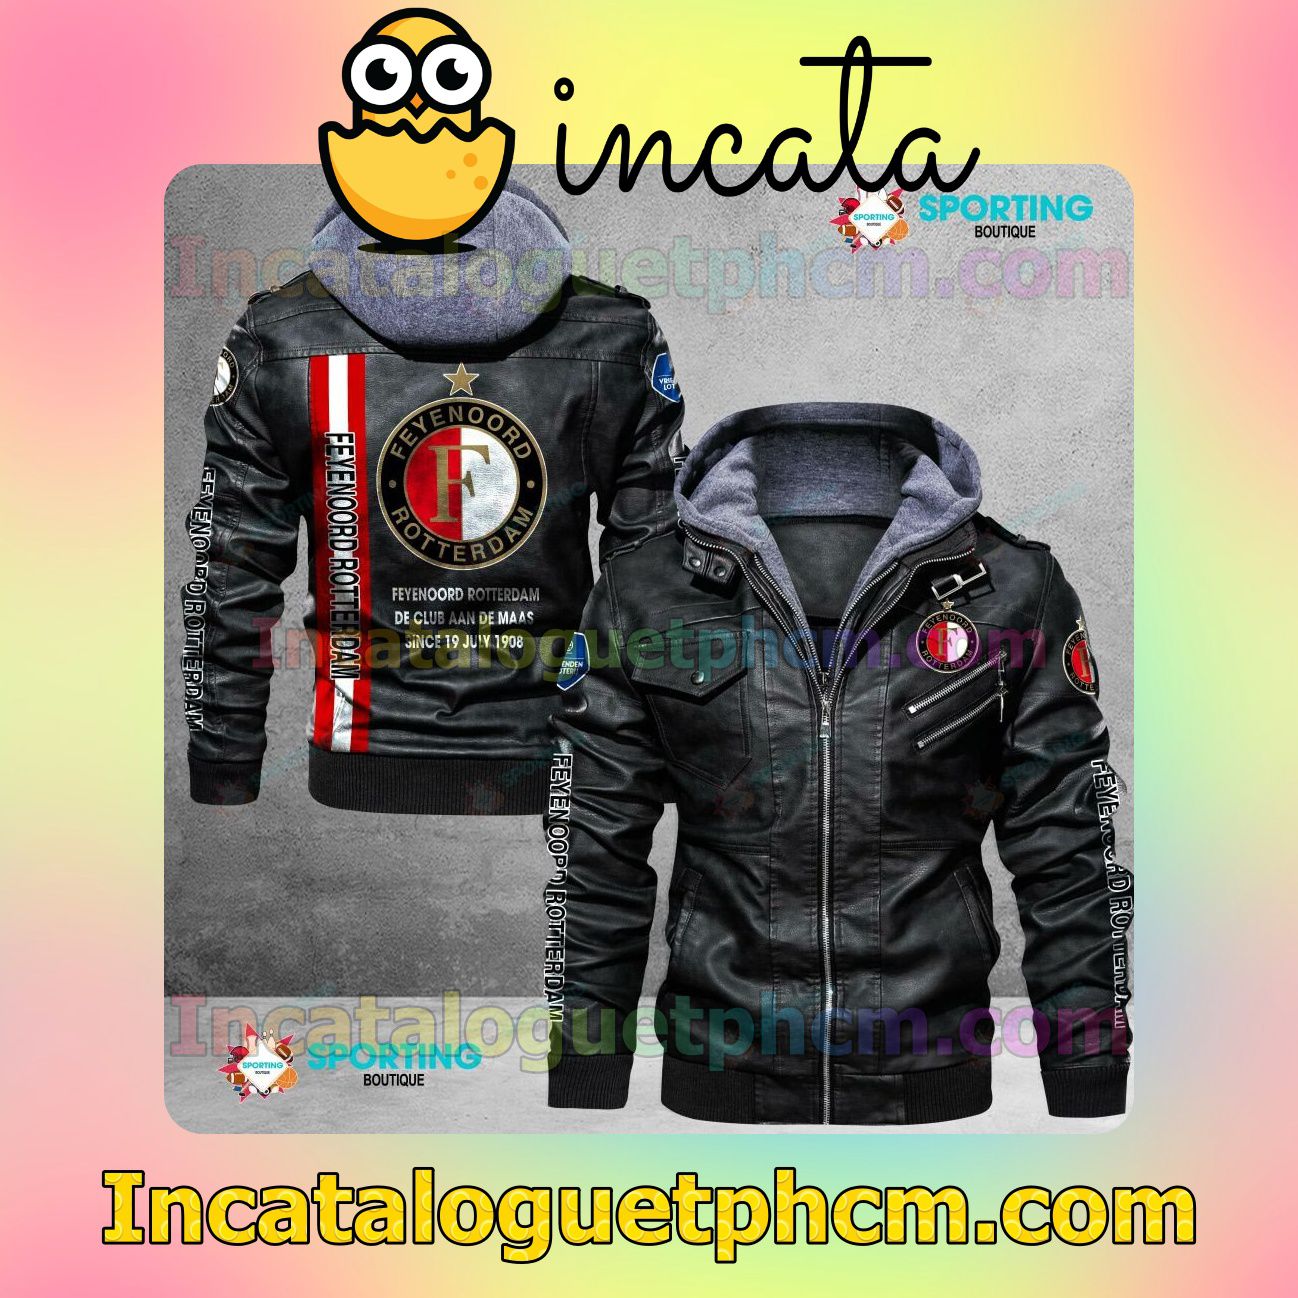 Feyenoord Rotterdam Brand Uniform Leather Jacket